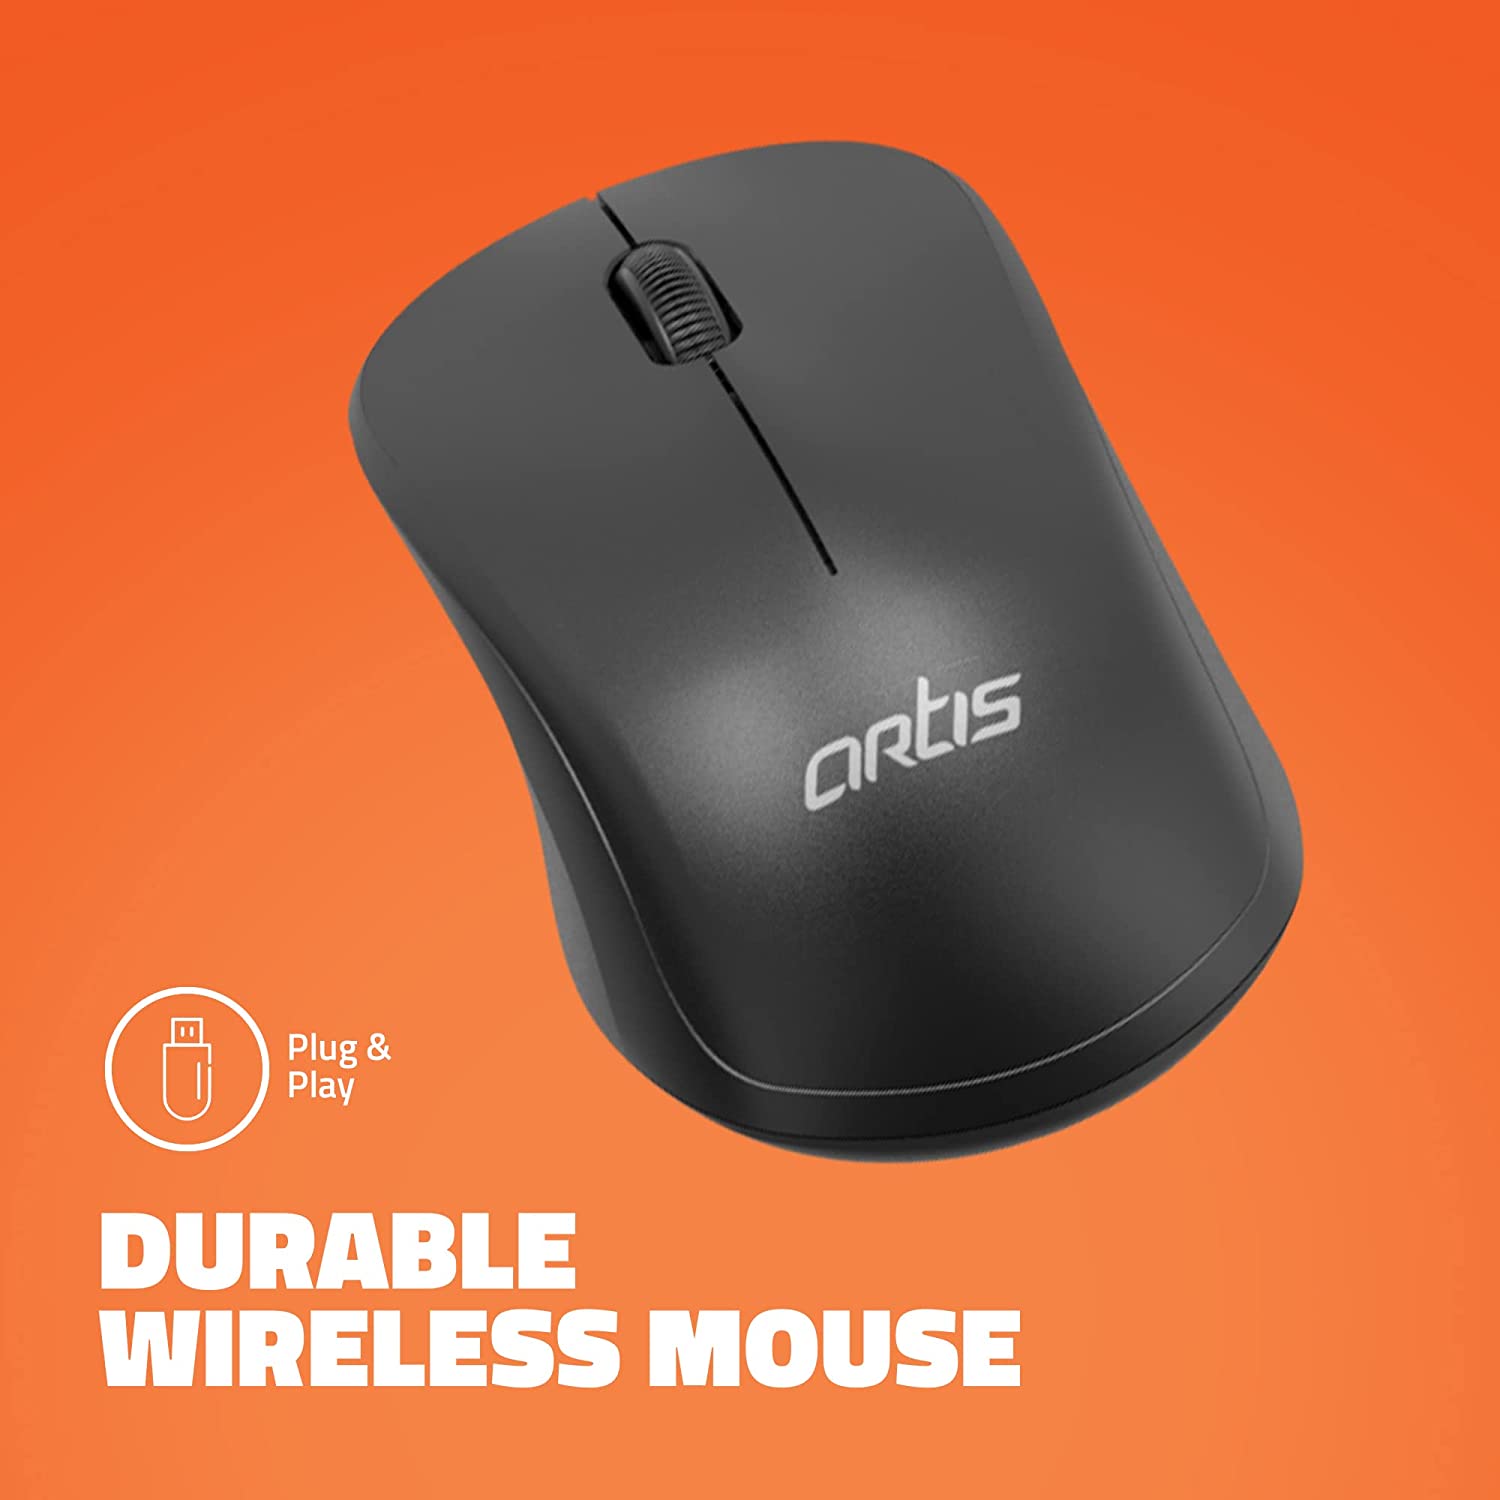 Artis WP10M Wireless Mouse Plug & Play 1200 DPI